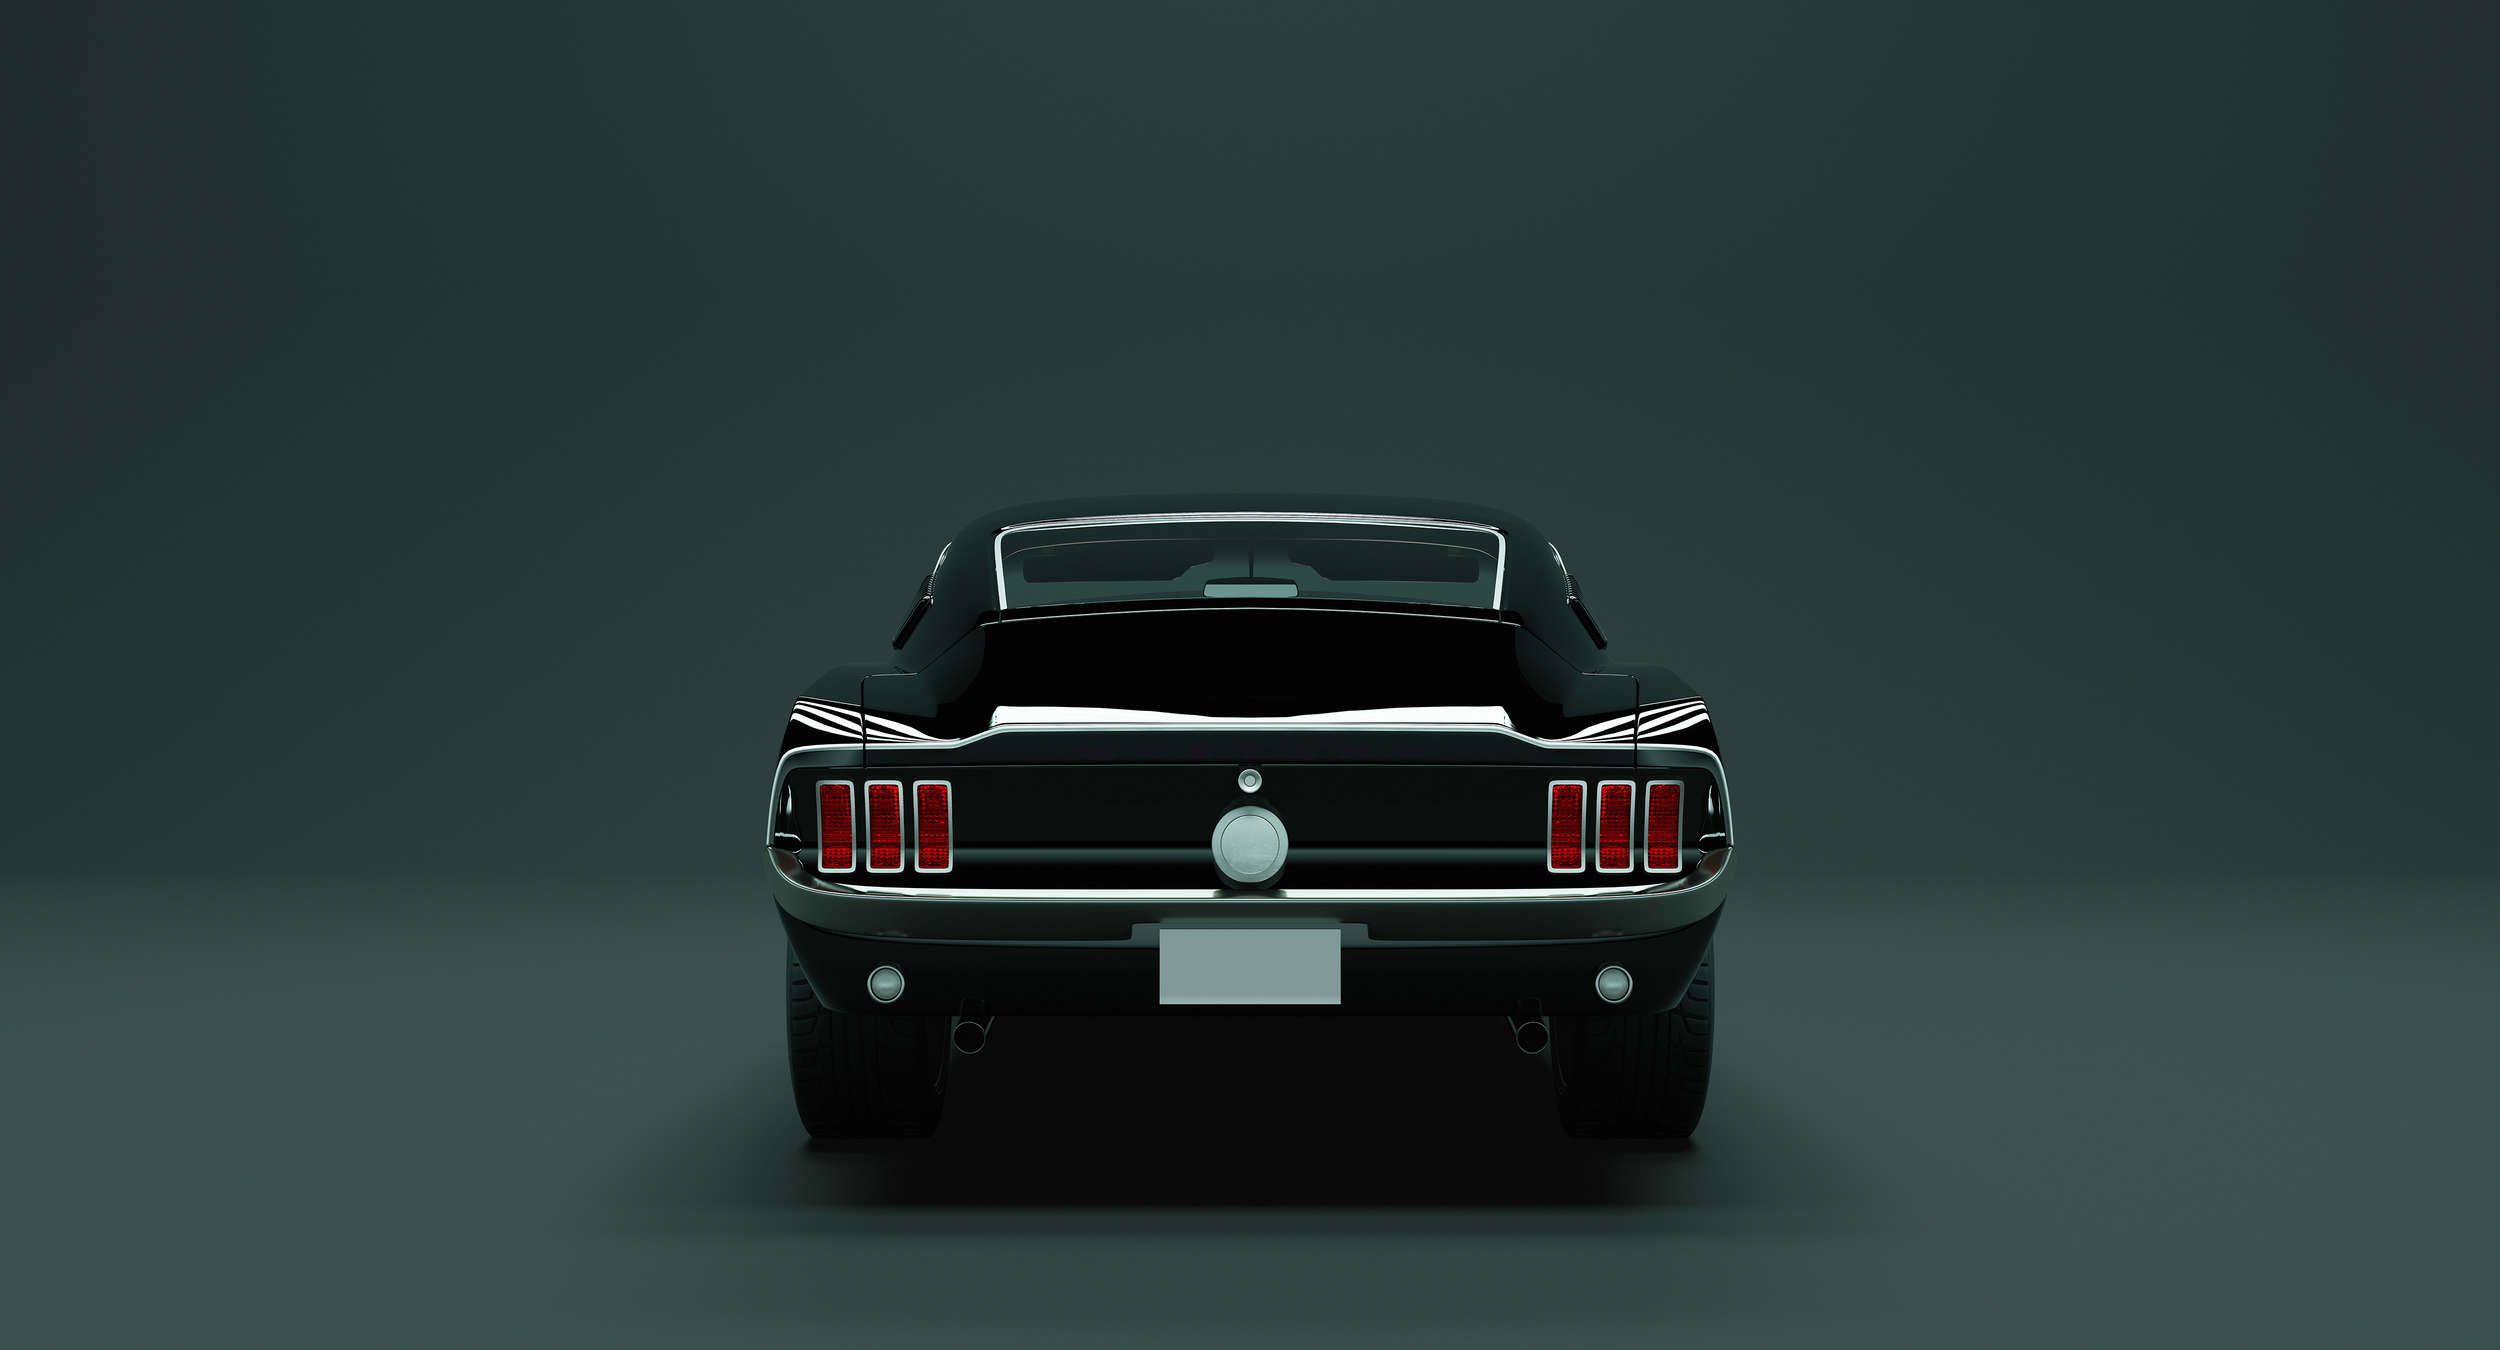             Mustang 3 - American Muscle Car Onderlaag behang - Blauw, Zwart | Parel Glad Vlies
        